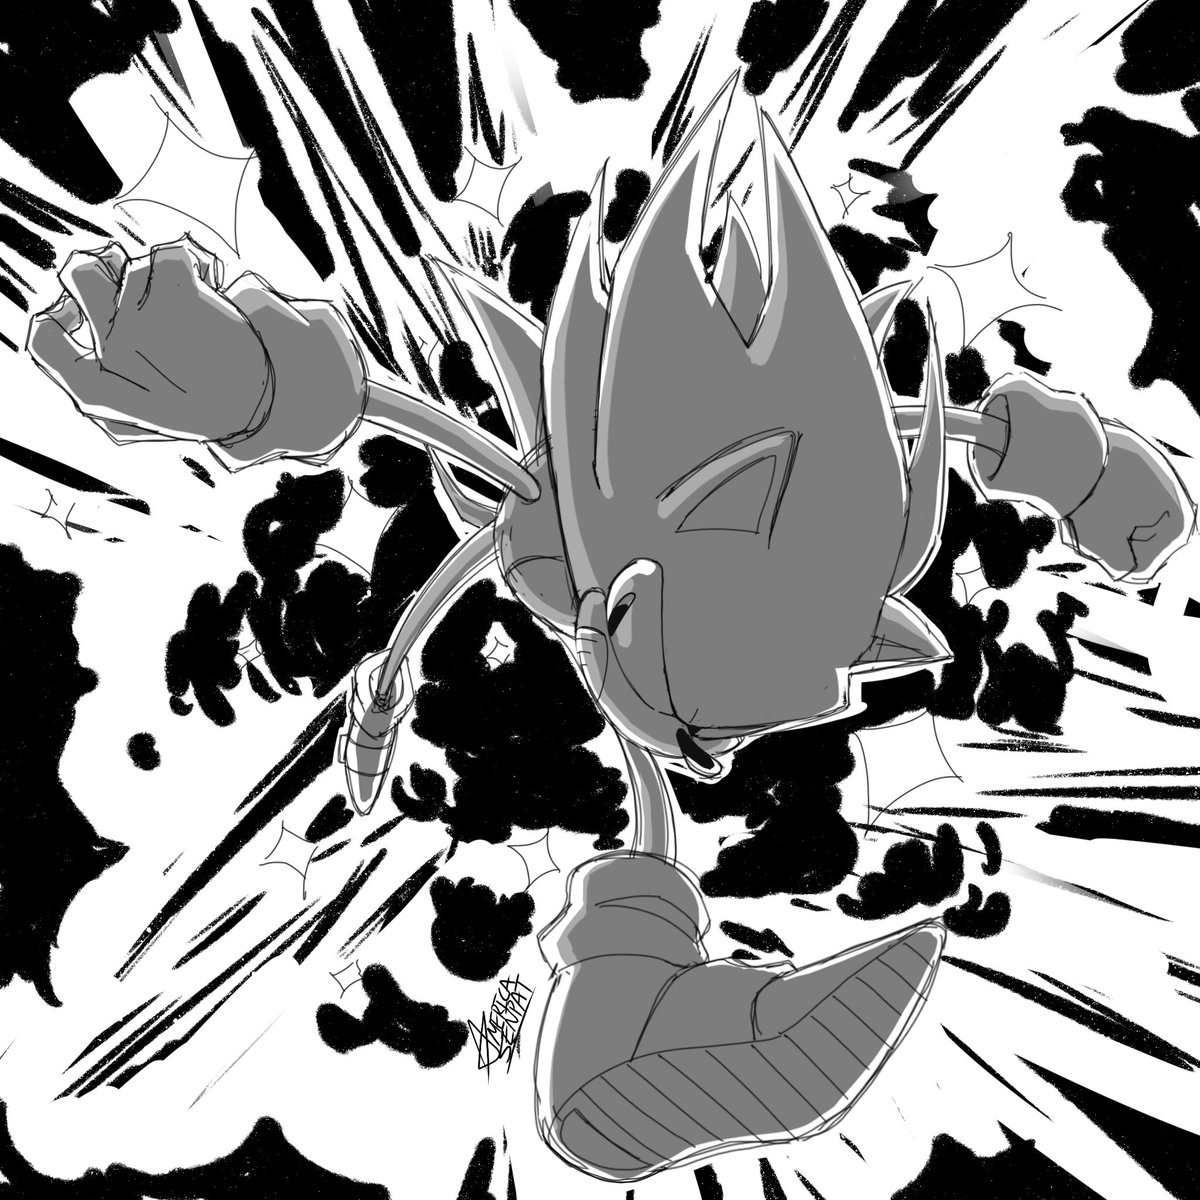 Doomsday Zone doodle 

#SonicTheHedgehog 
#Sonic 